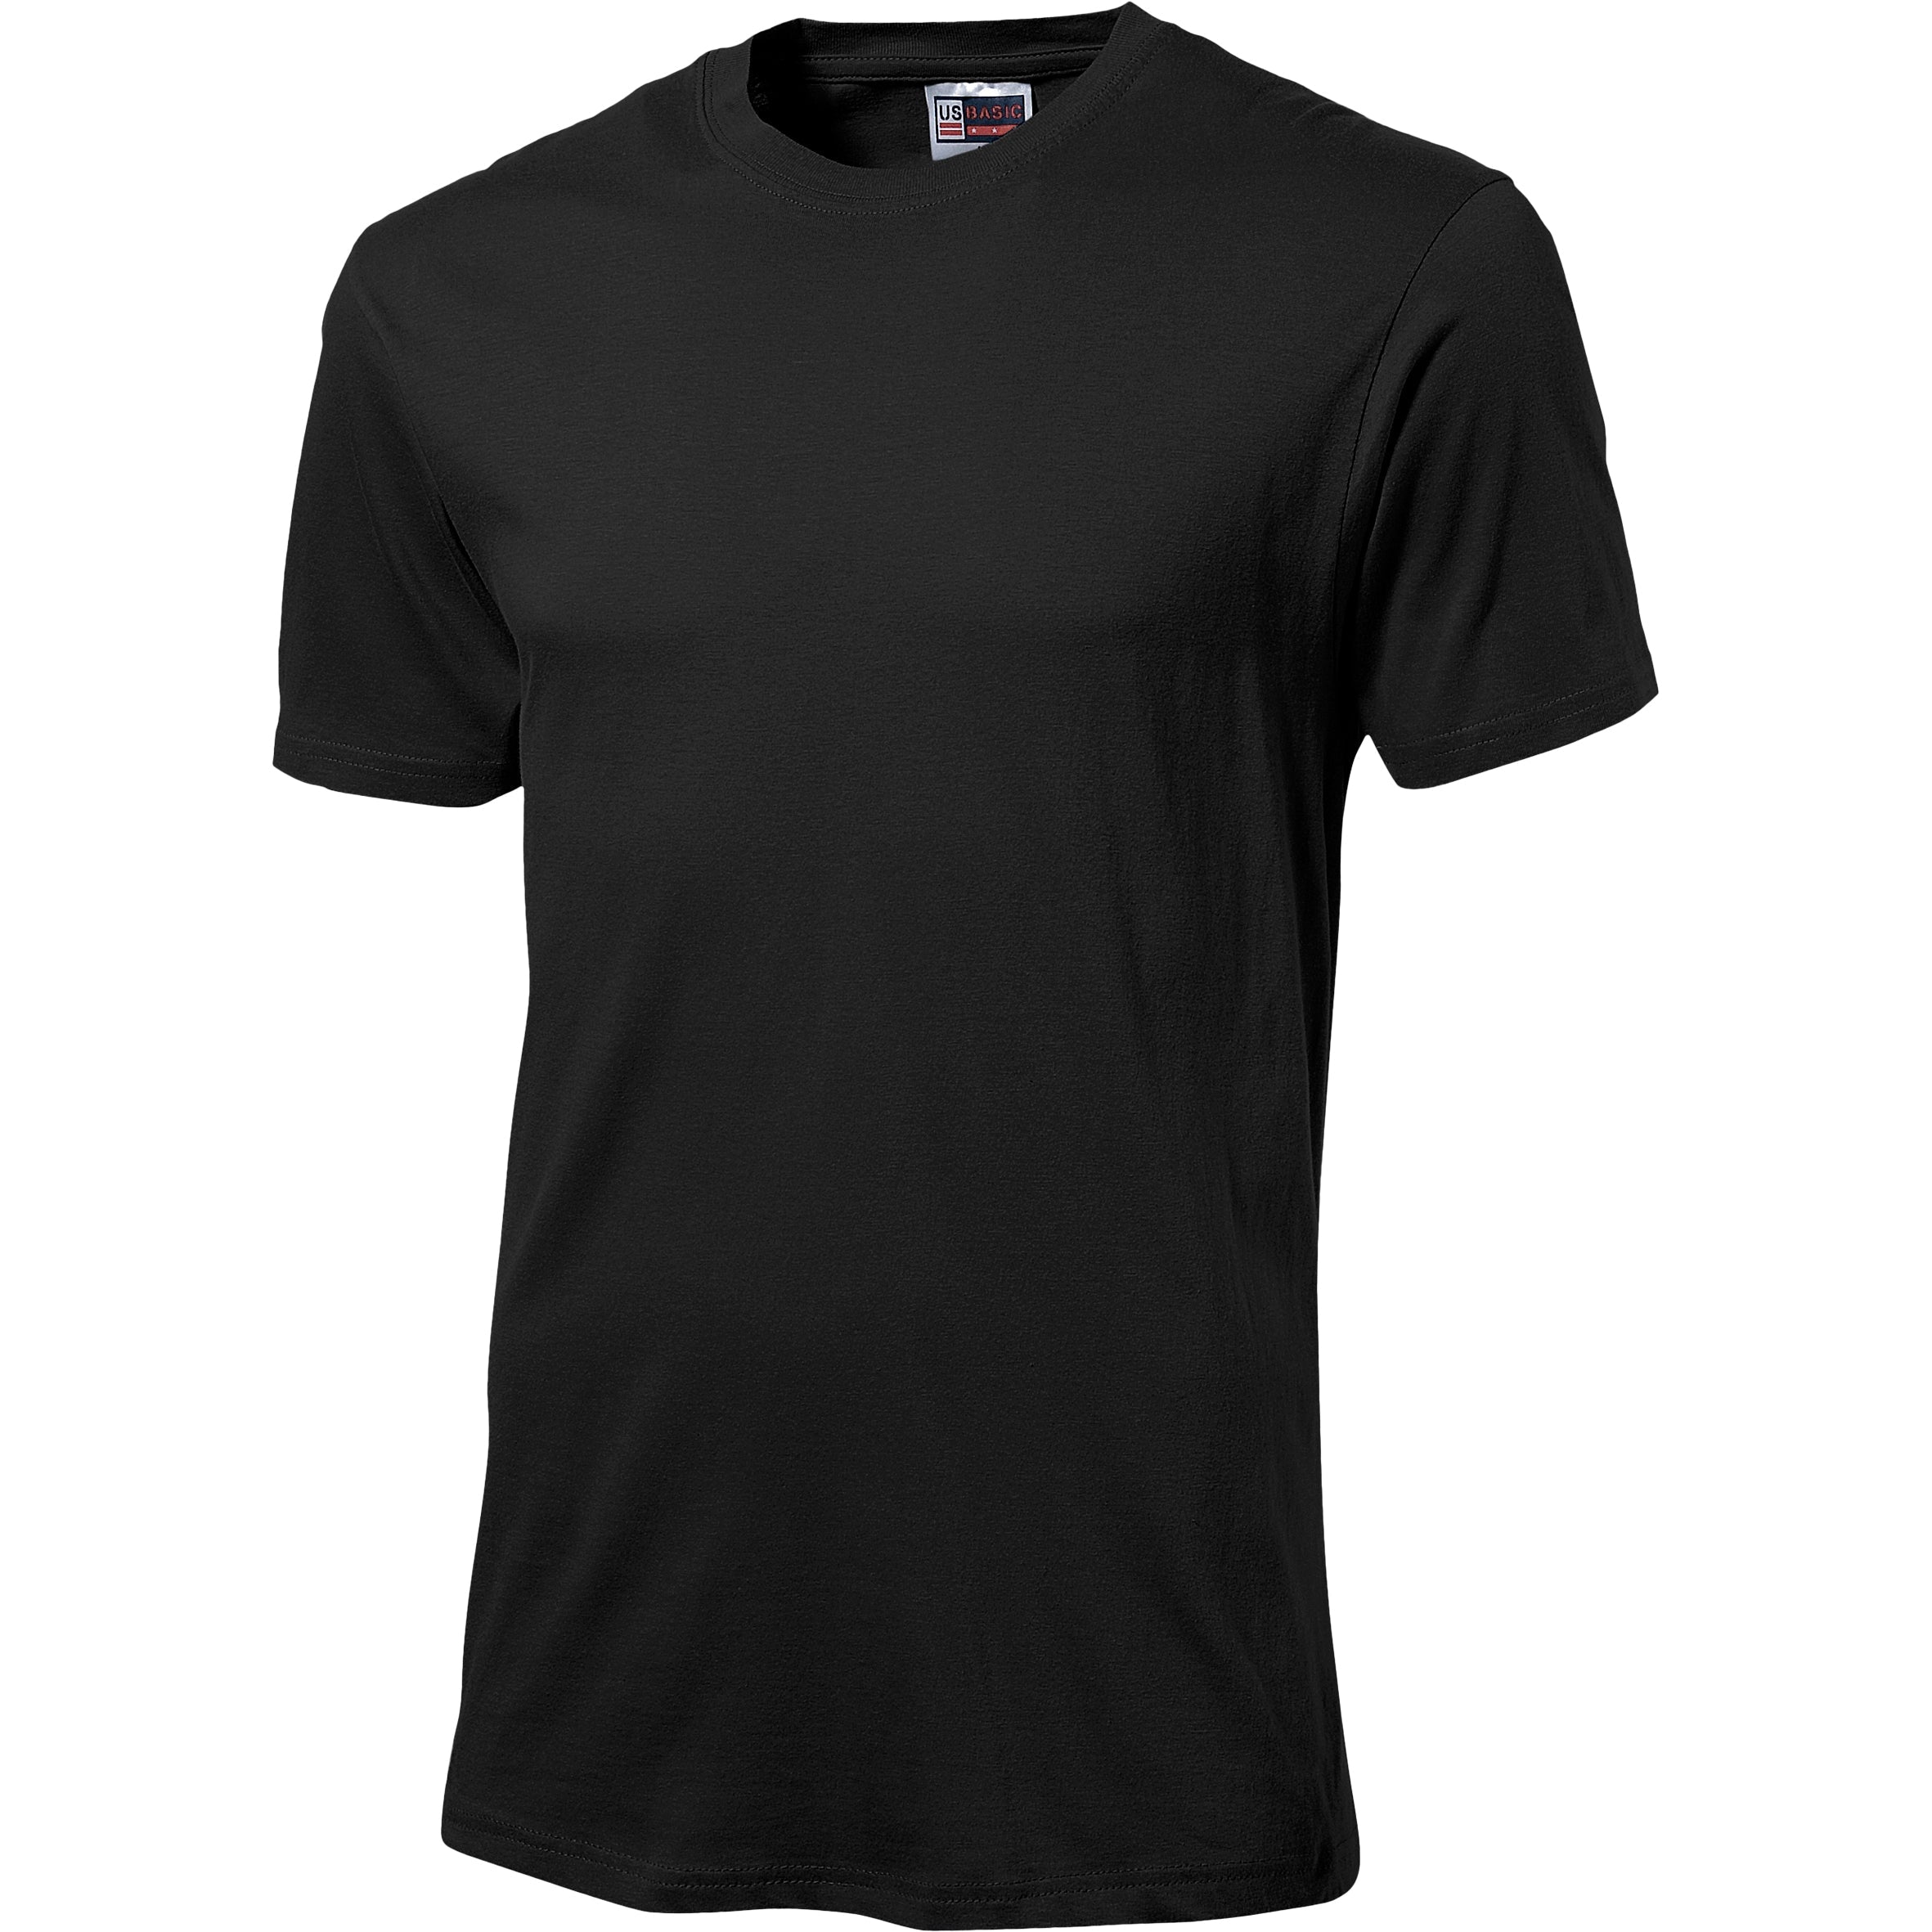 Unisex Super Club 165 T-Shirt-2XL-Black-BL